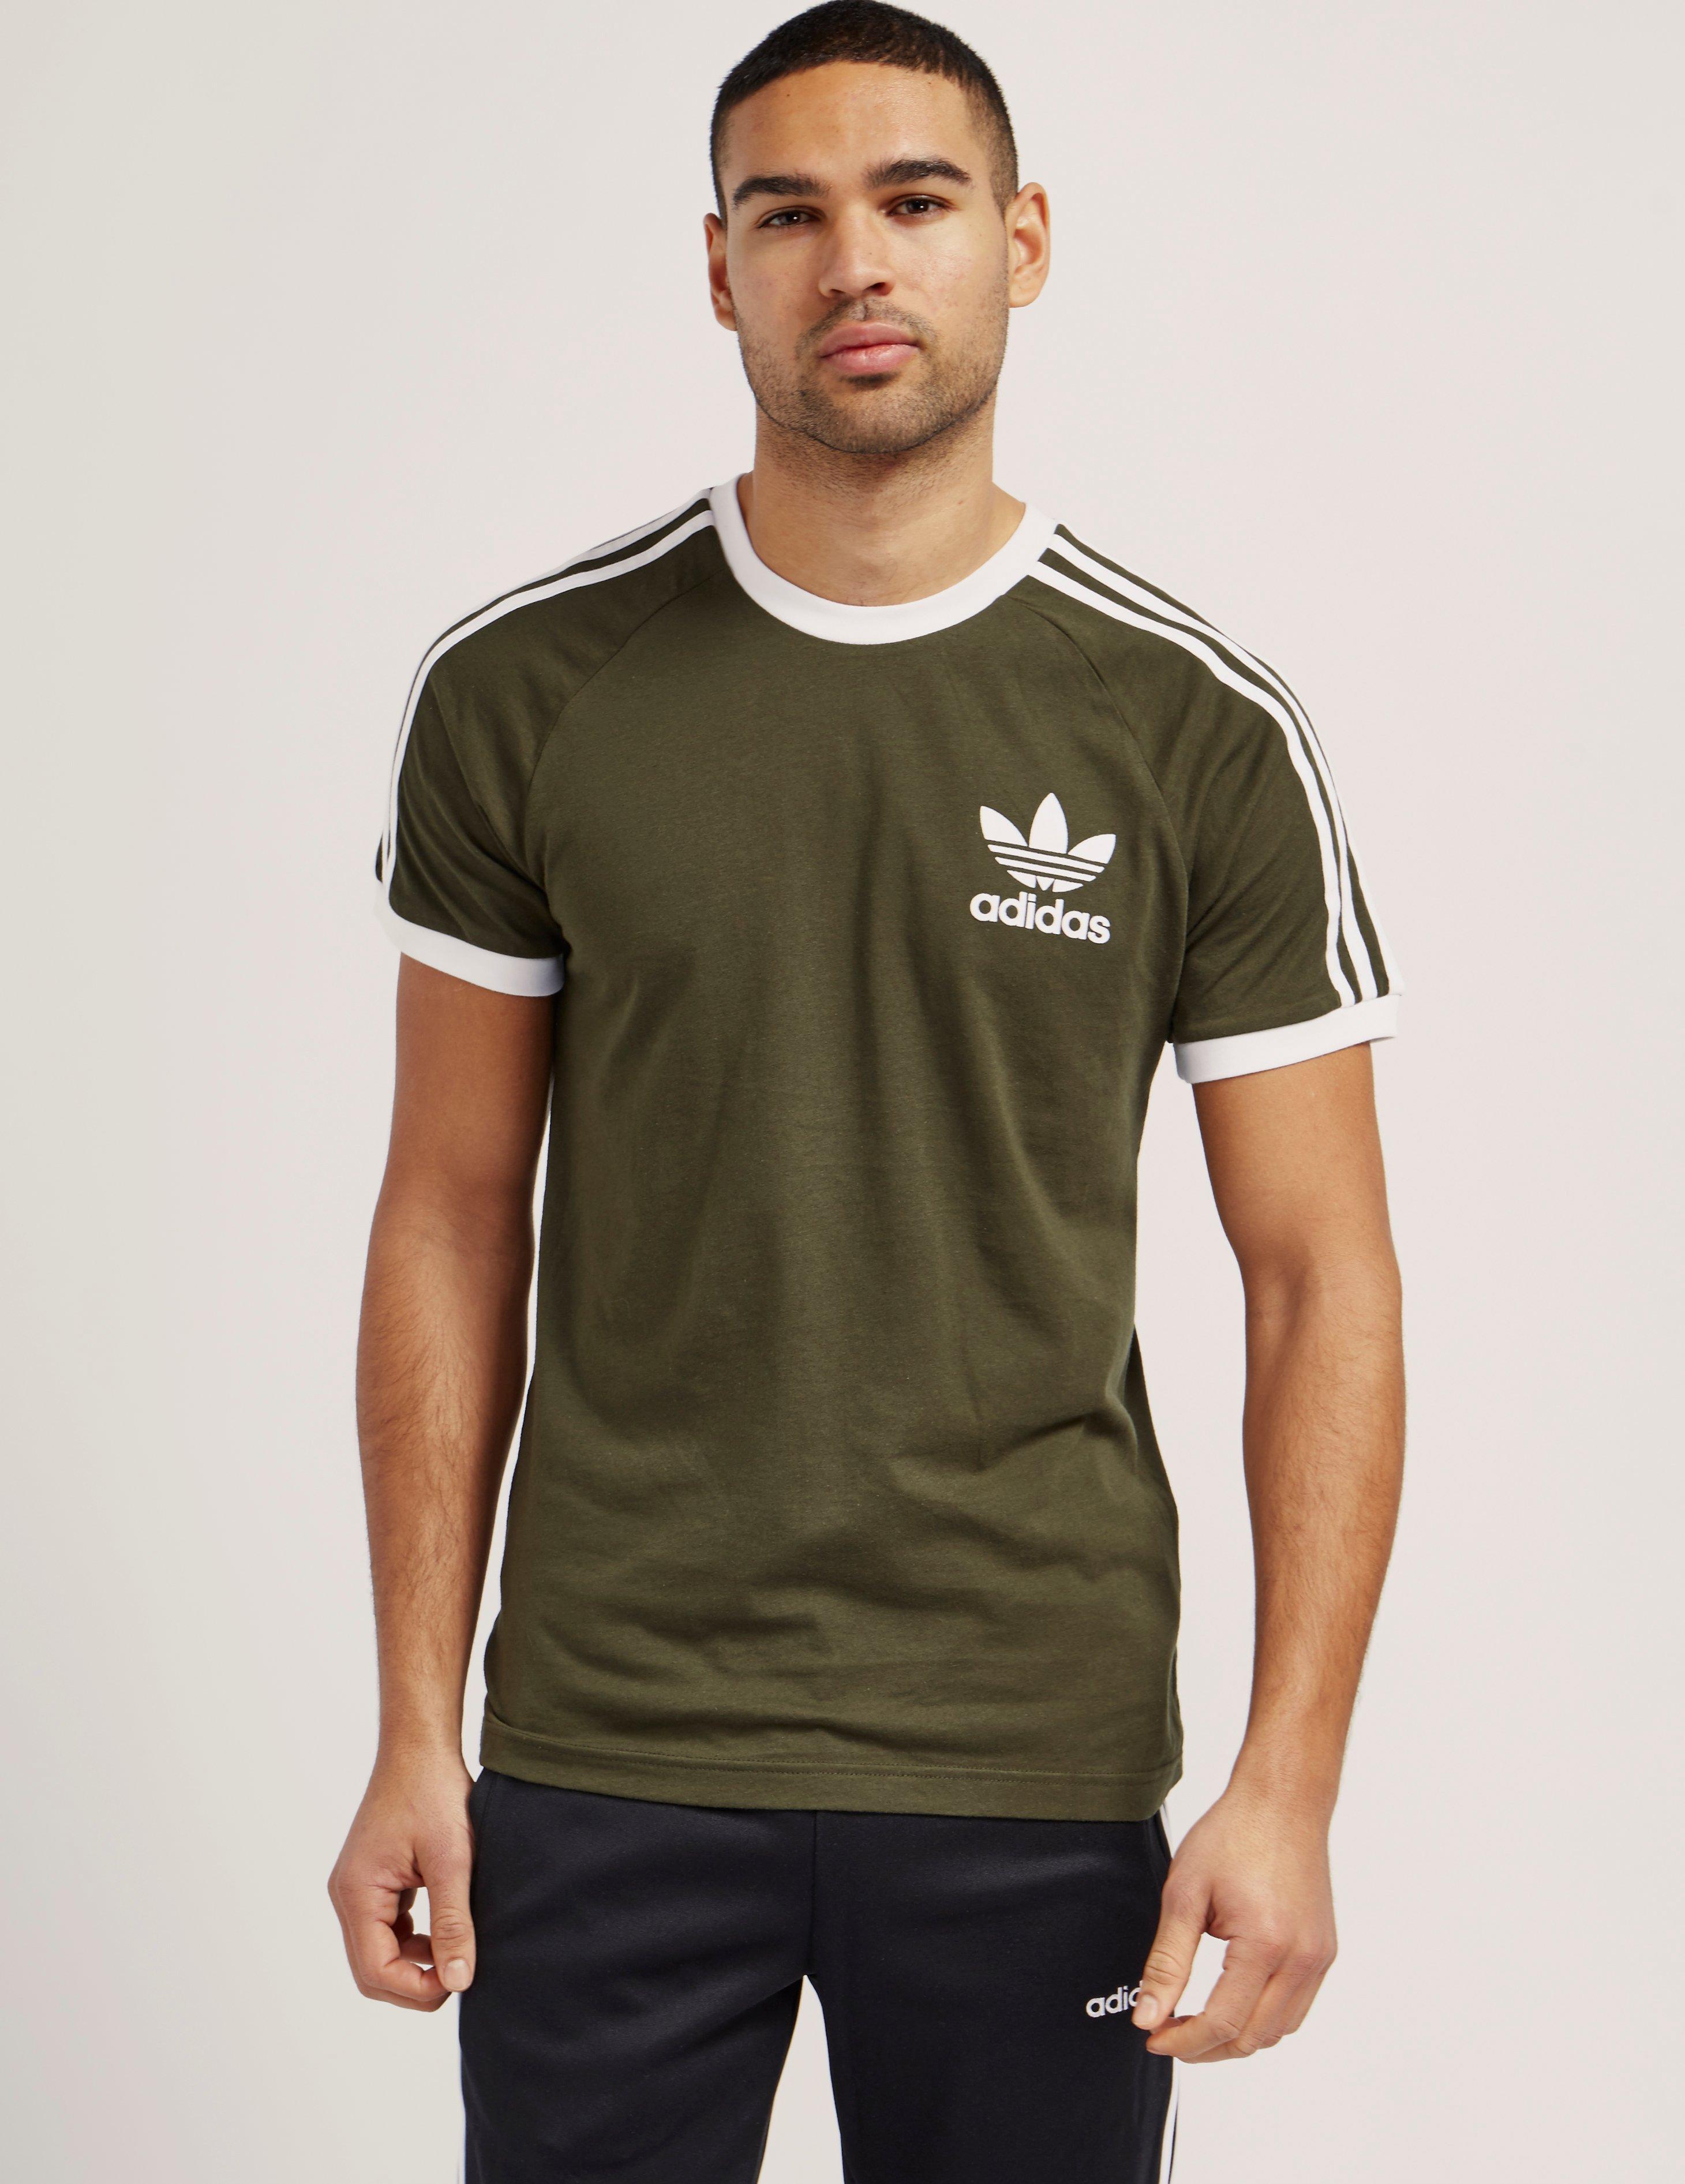 adidas Originals Cotton California Short Sleeve T-shirt in Green for